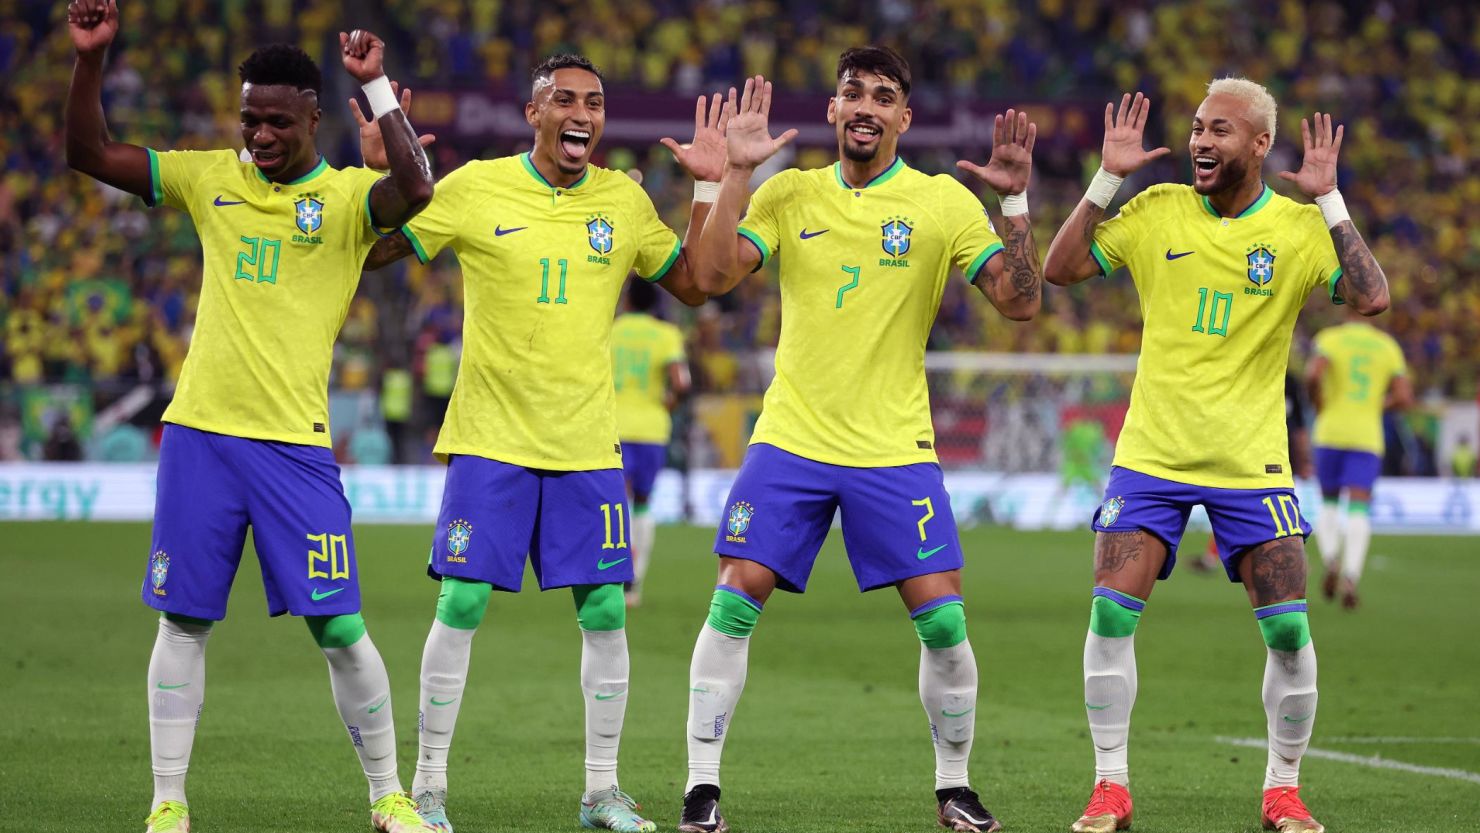 Soccer, football or whatever: Brazil Greatest All-time Team